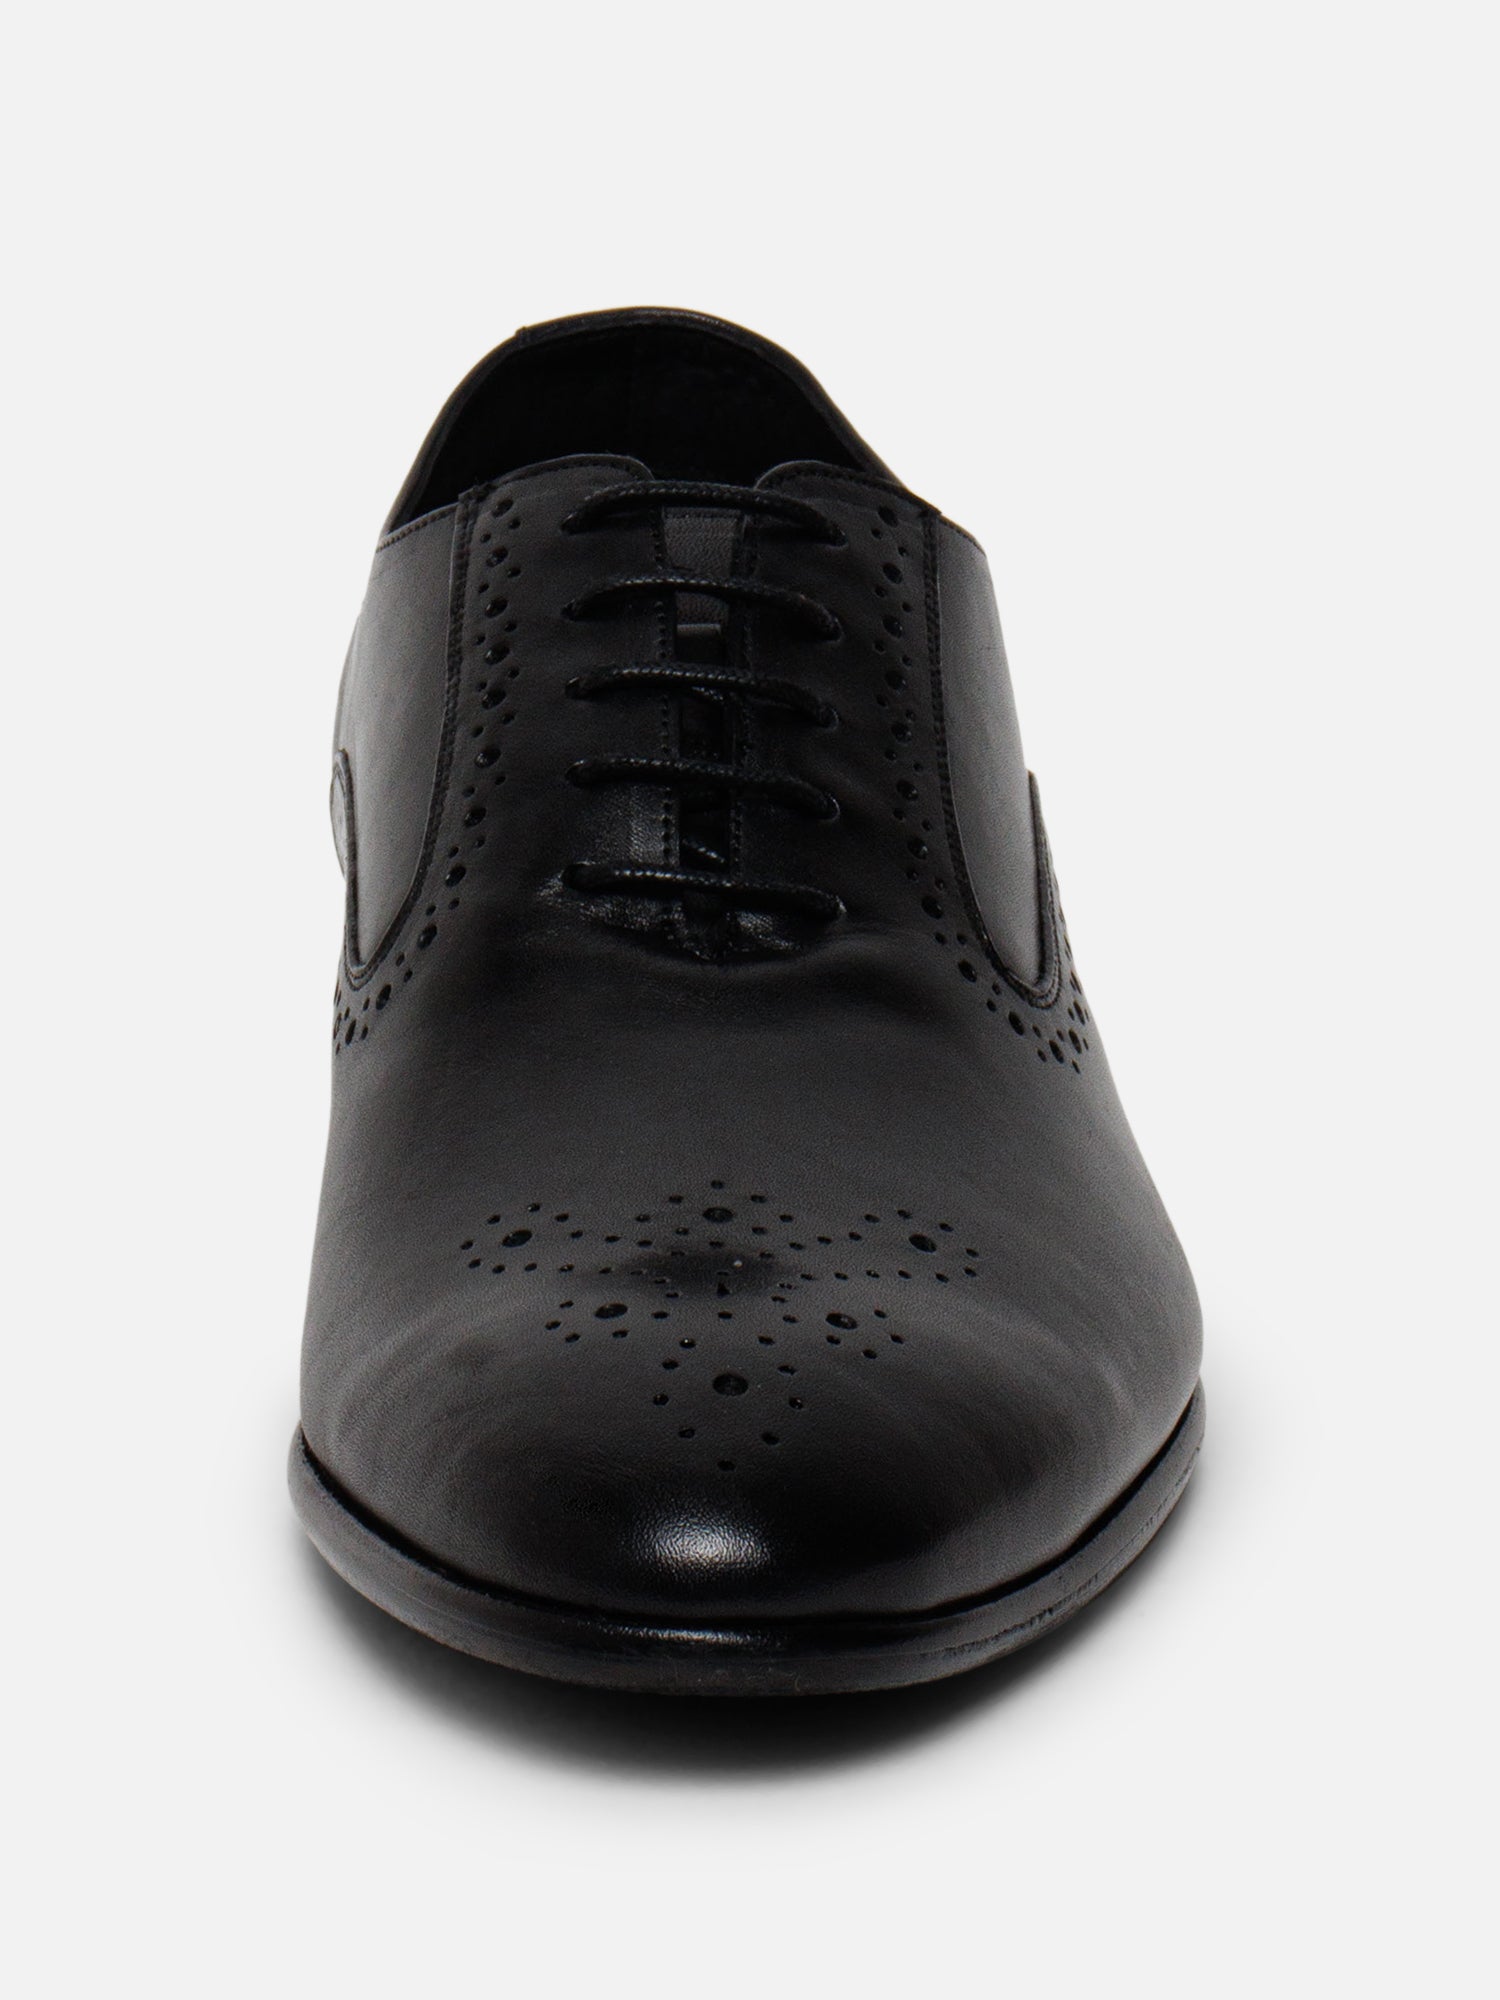 Ezok Leather Formal Shoes For Men